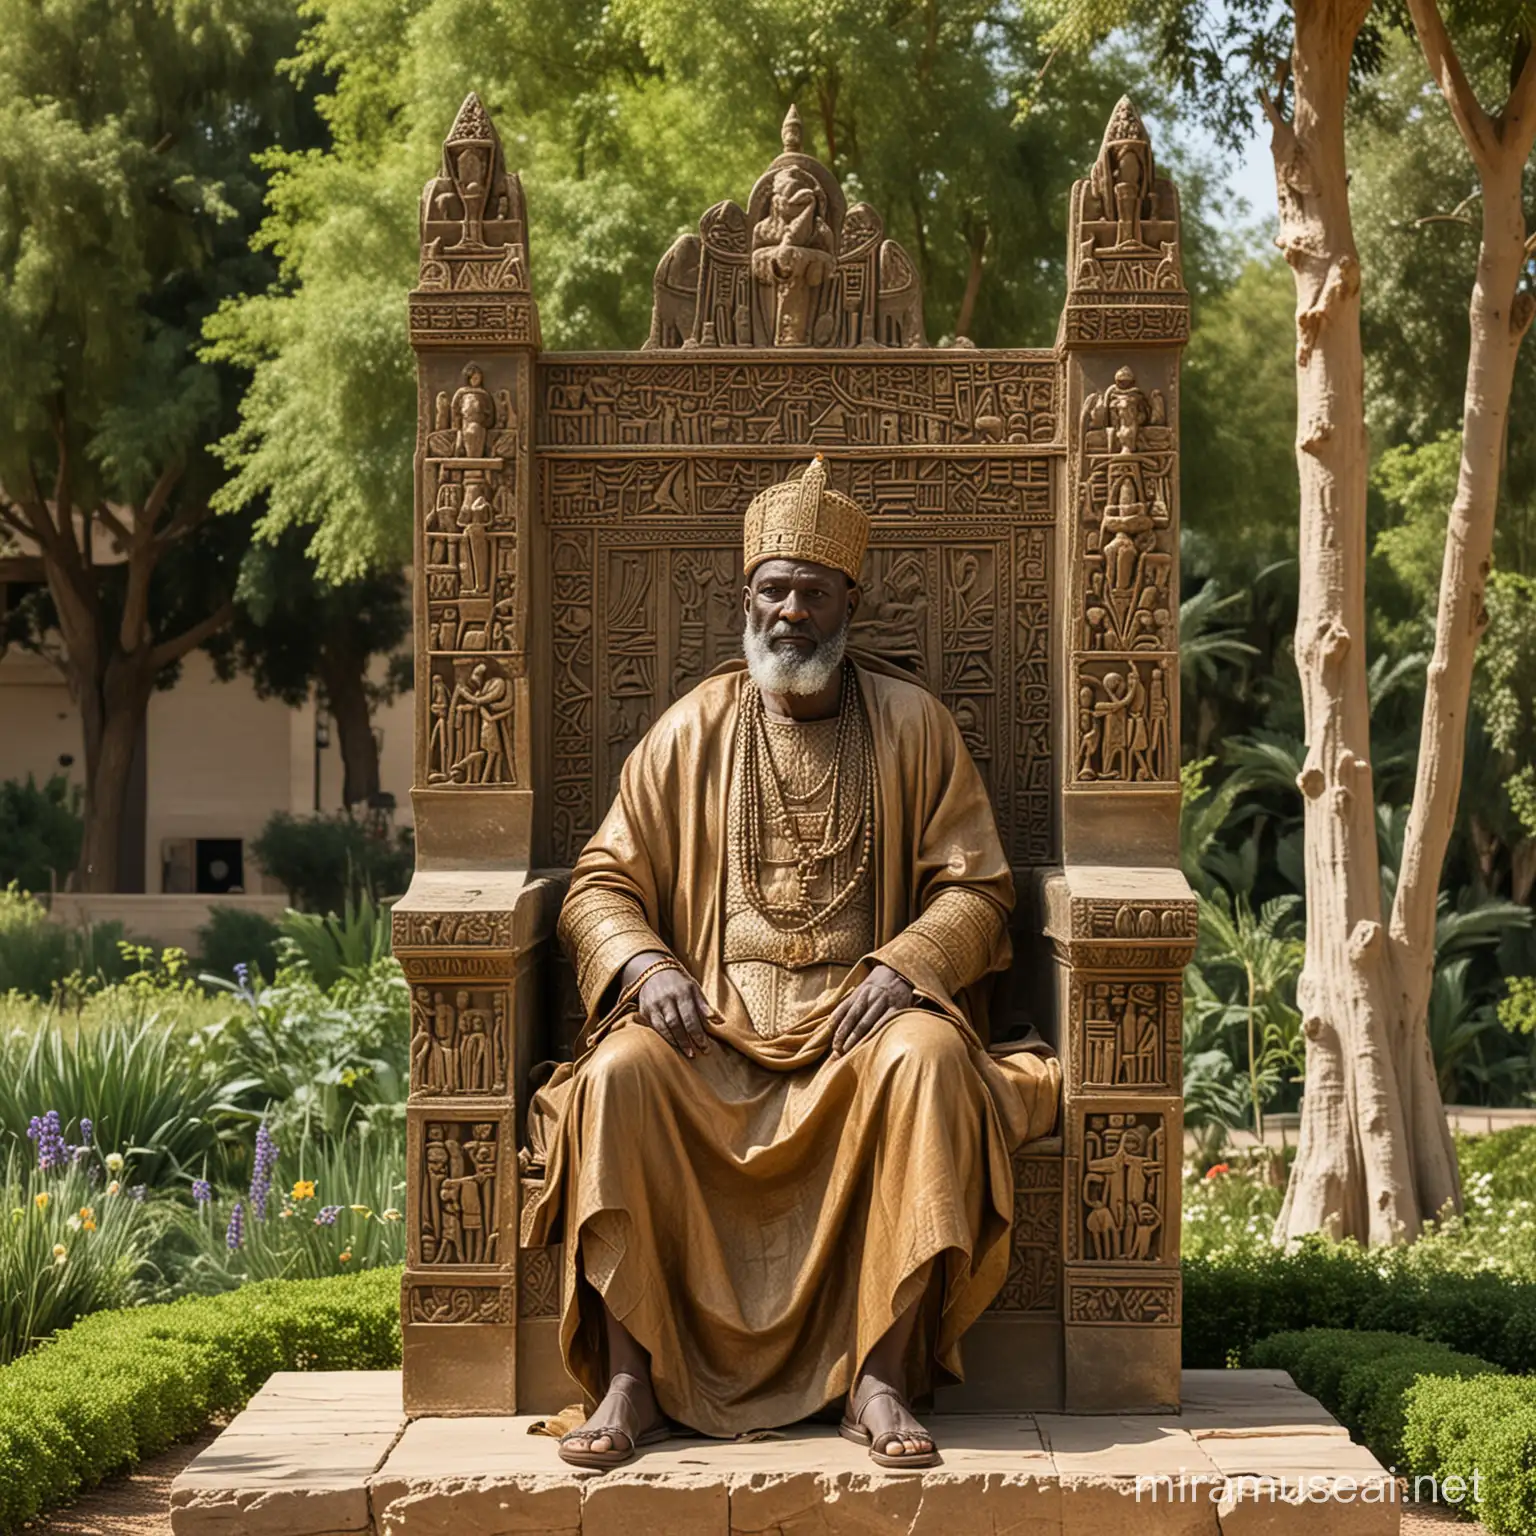 Numidian King JUBA II Seated on Bronze Throne in Botanical Garden